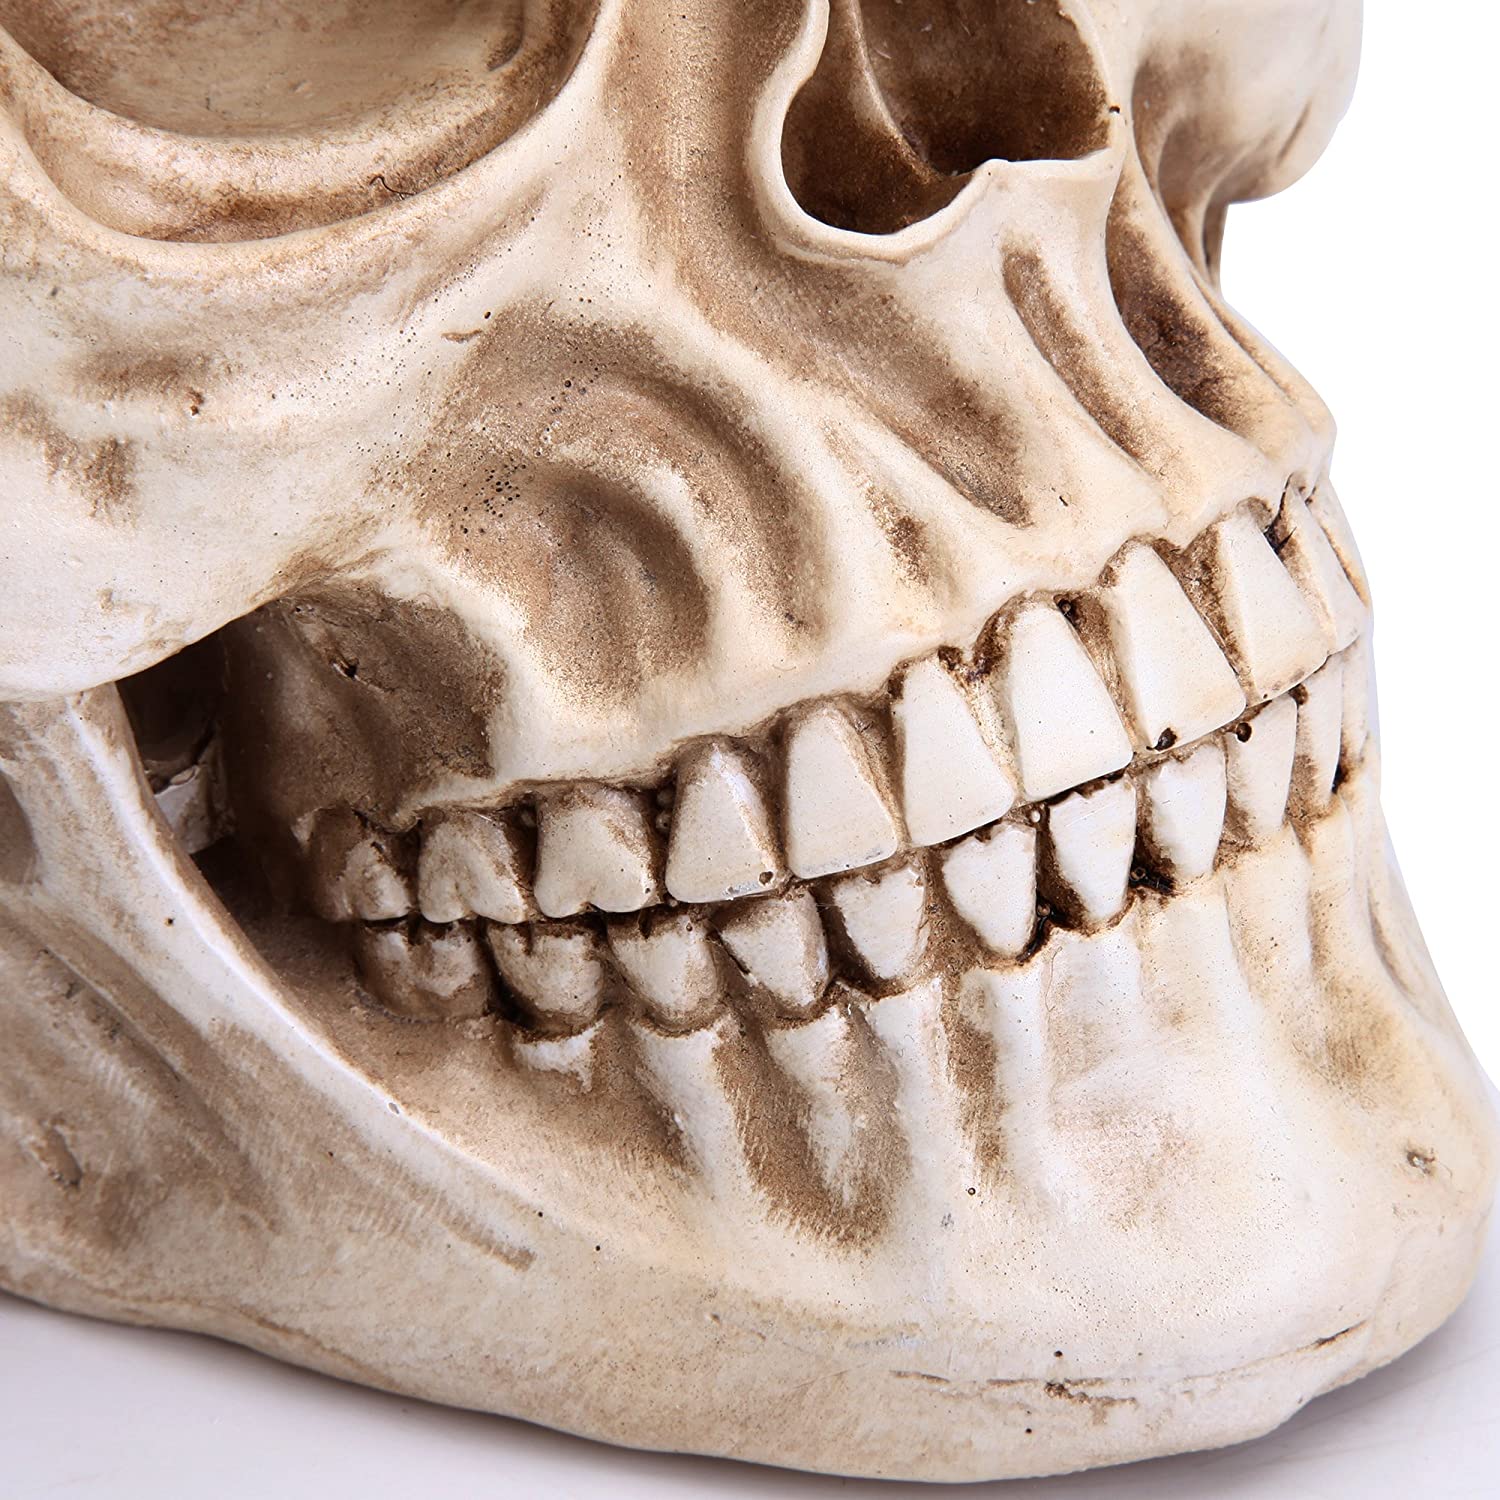 1:1 Replica Realistic Human Adult Skull Head Bone Model